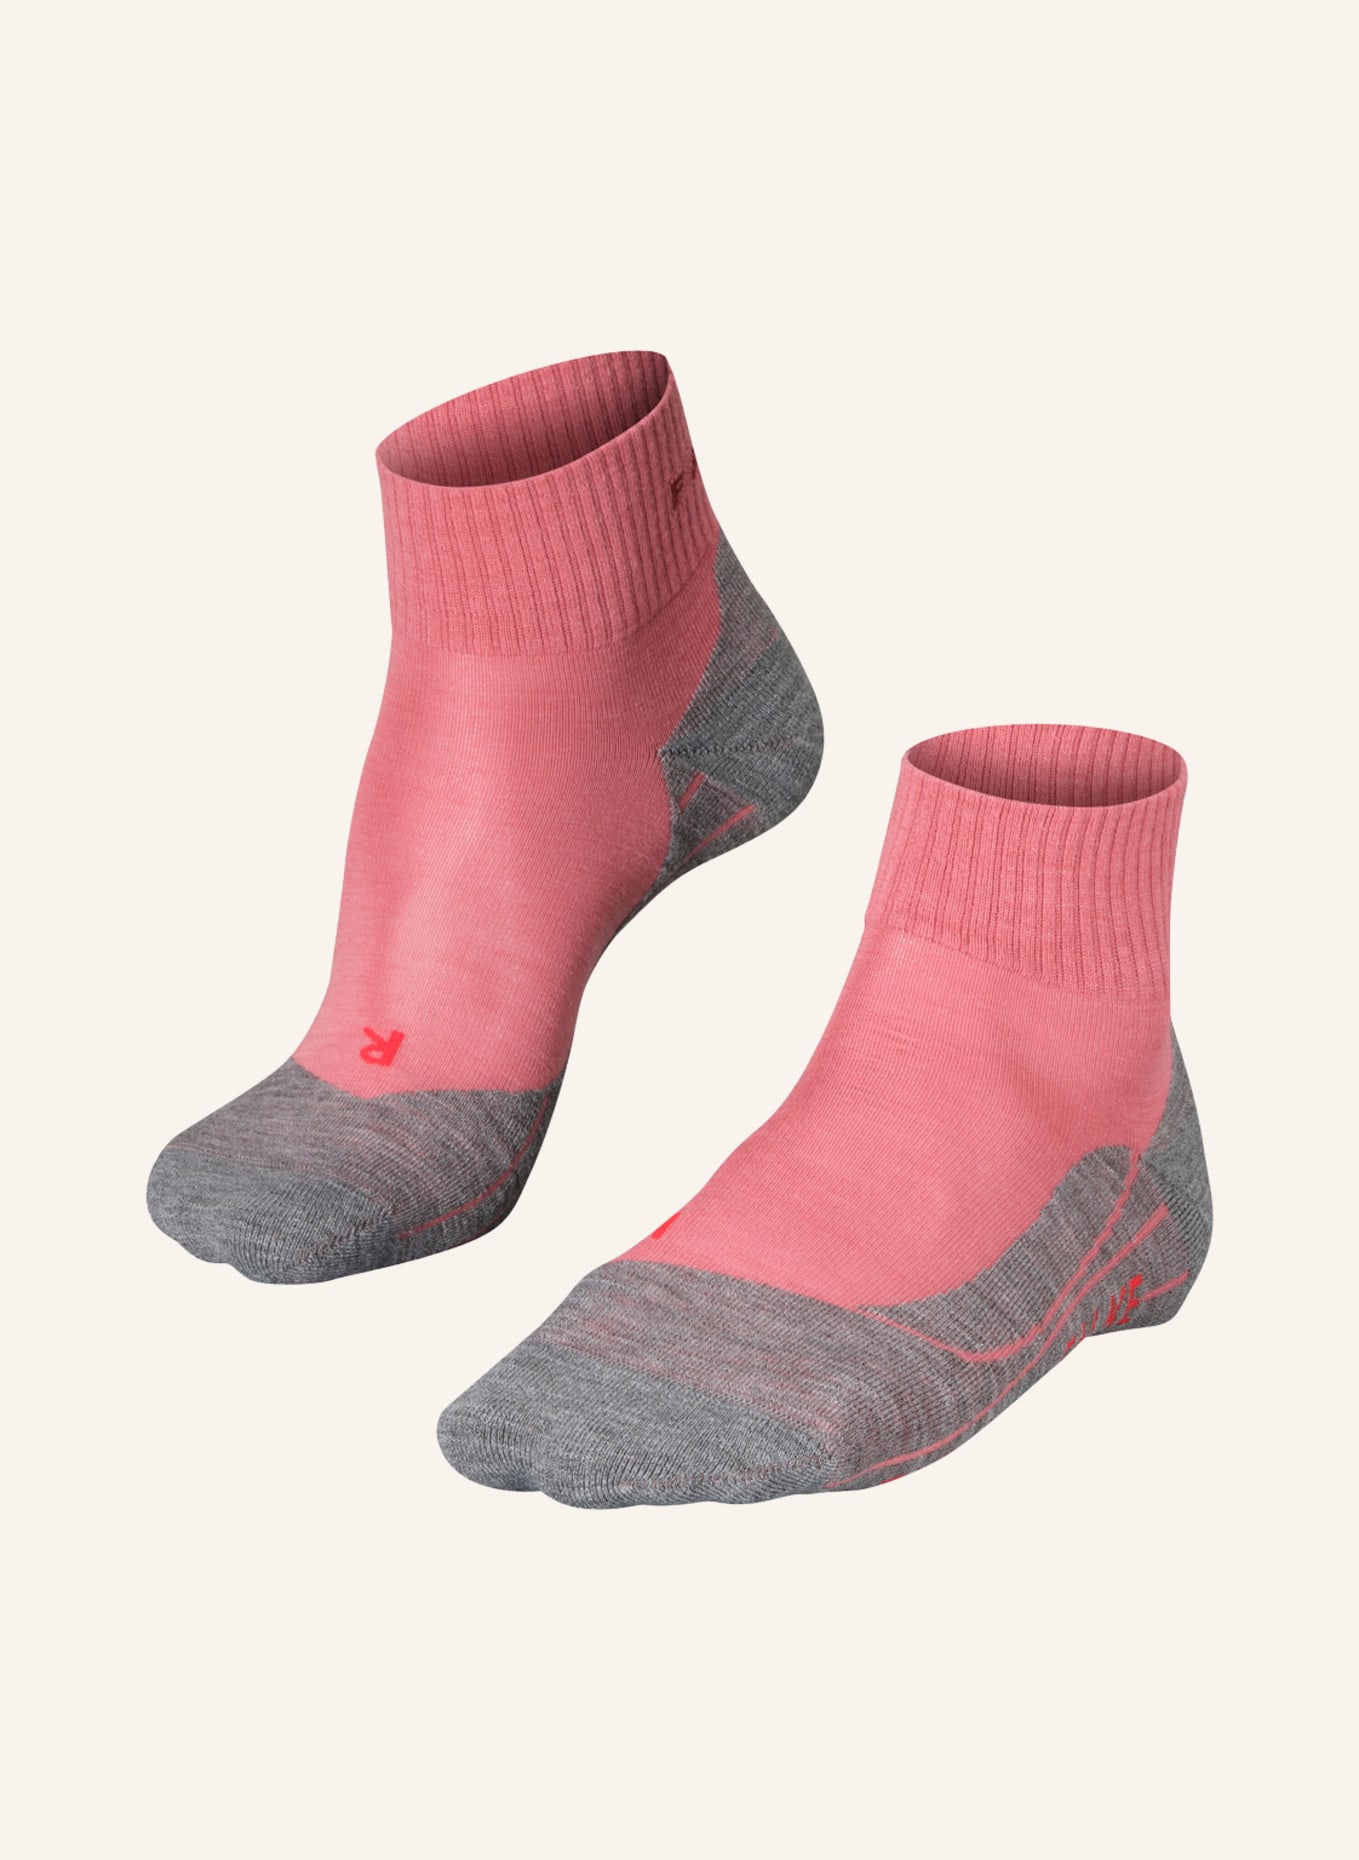 FALKE Trekking-Socken TK5 ULTRALIGHT, Farbe: 8215 mixed berry (Bild 1)